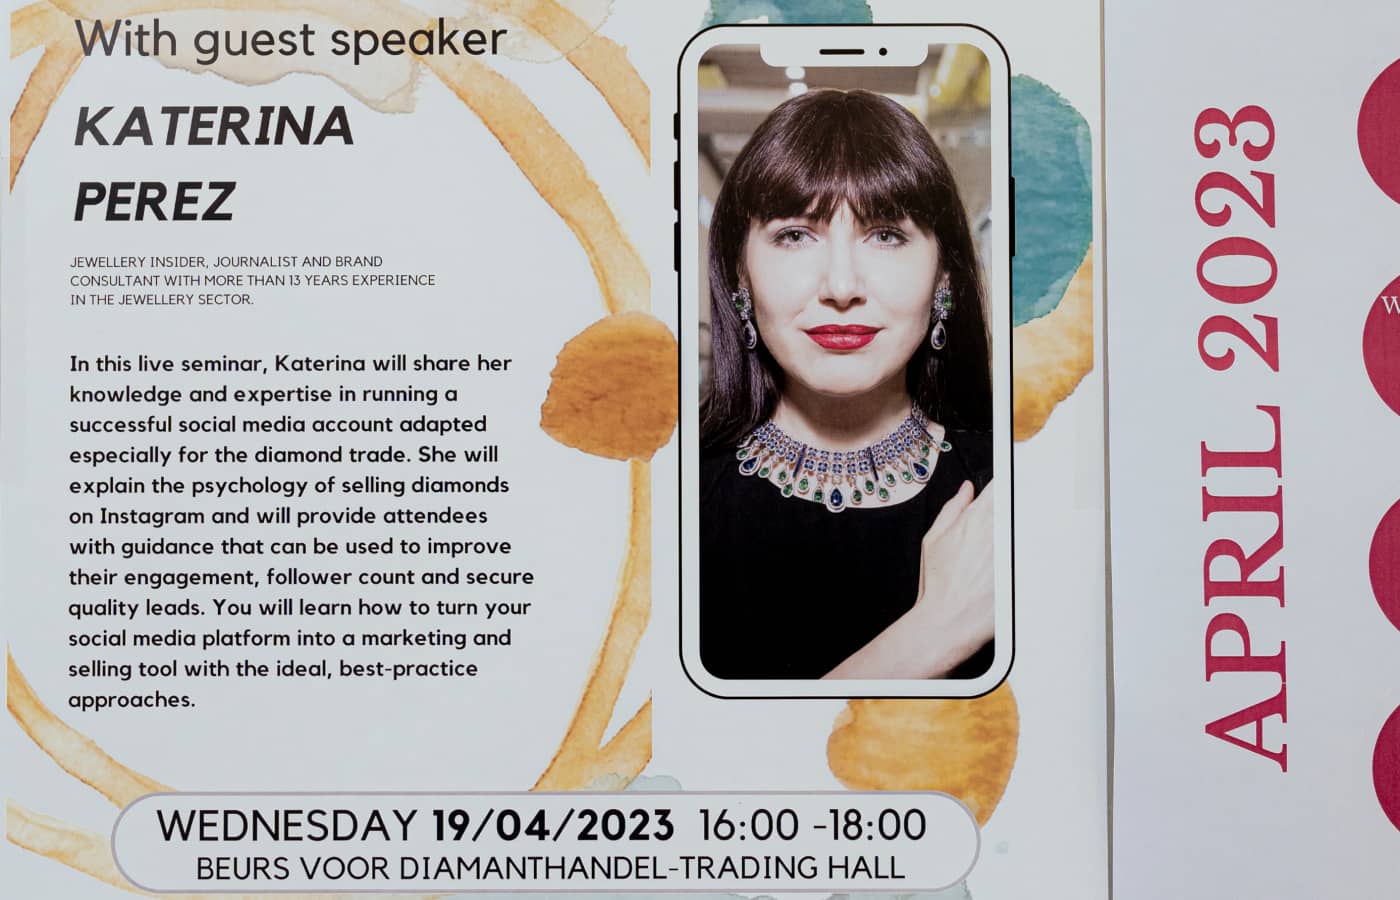 An advert for Katerina Perez's social media talk at the Antwerp Diamond Bourse in April 2023